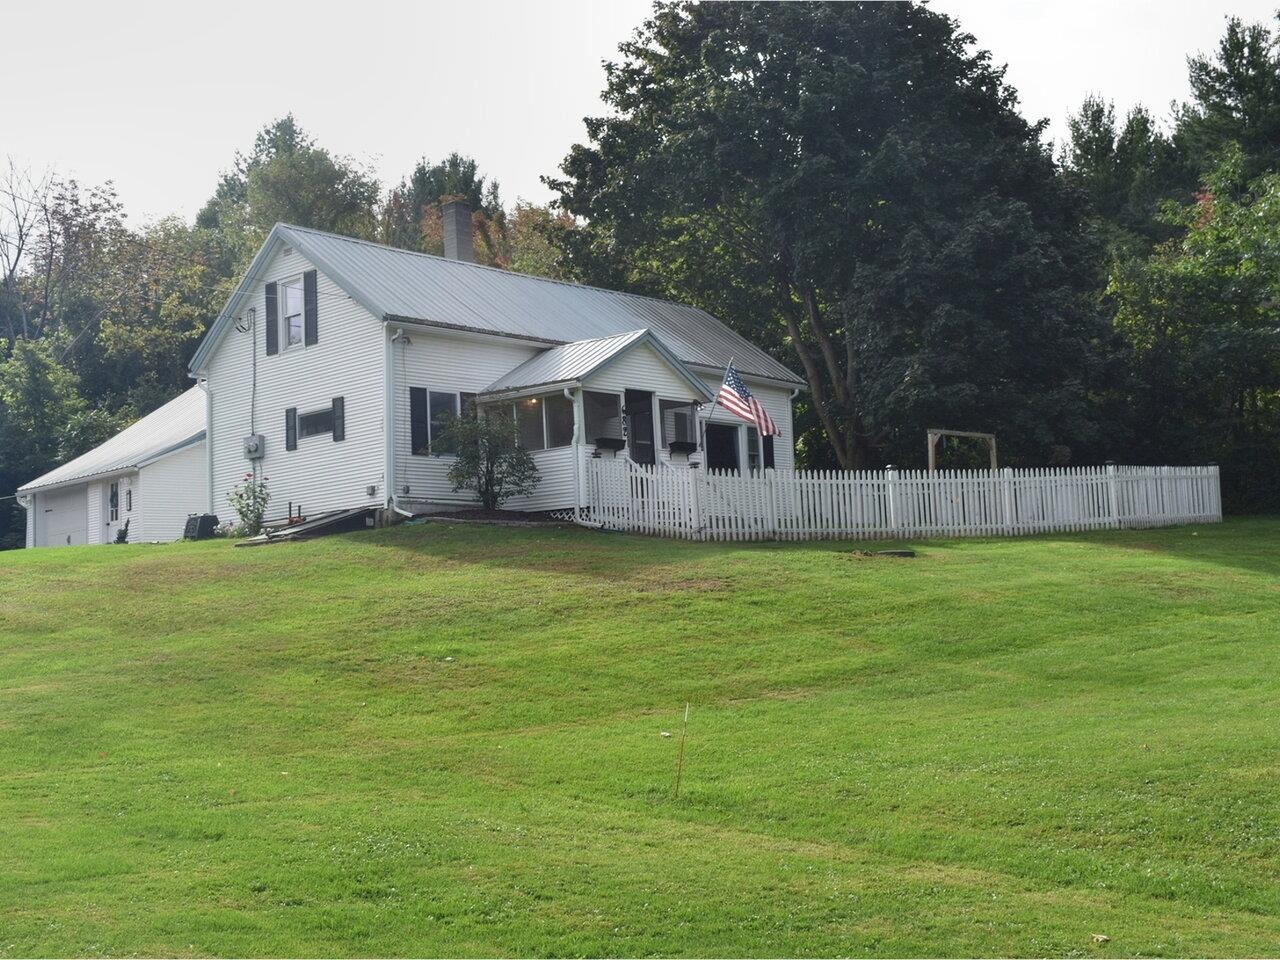 Sold property in Georgia